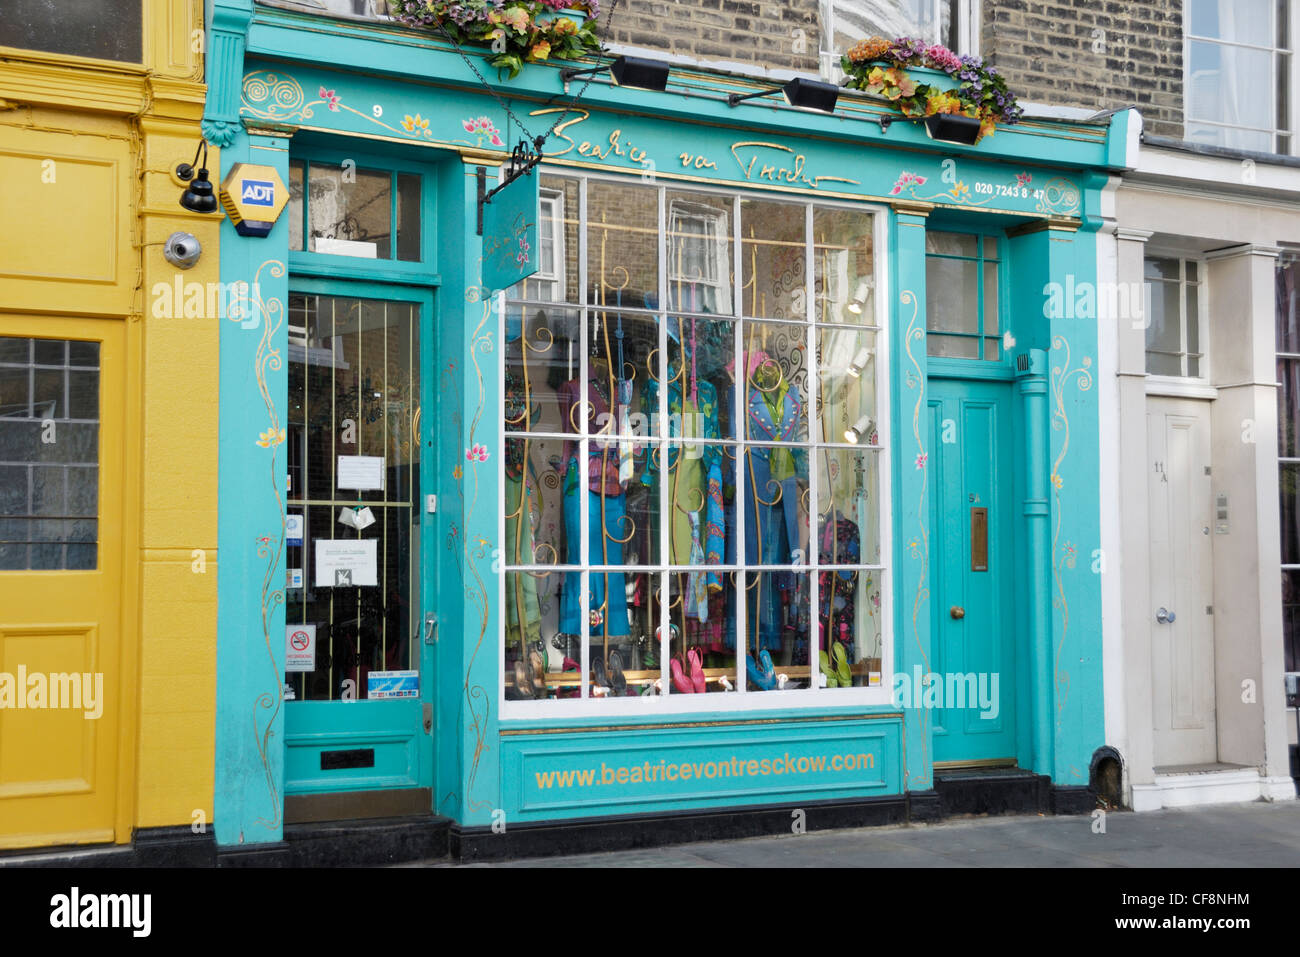 Beatrice von Tresckow clothing shop in Portobello Road, London, England  Stock Photo - Alamy